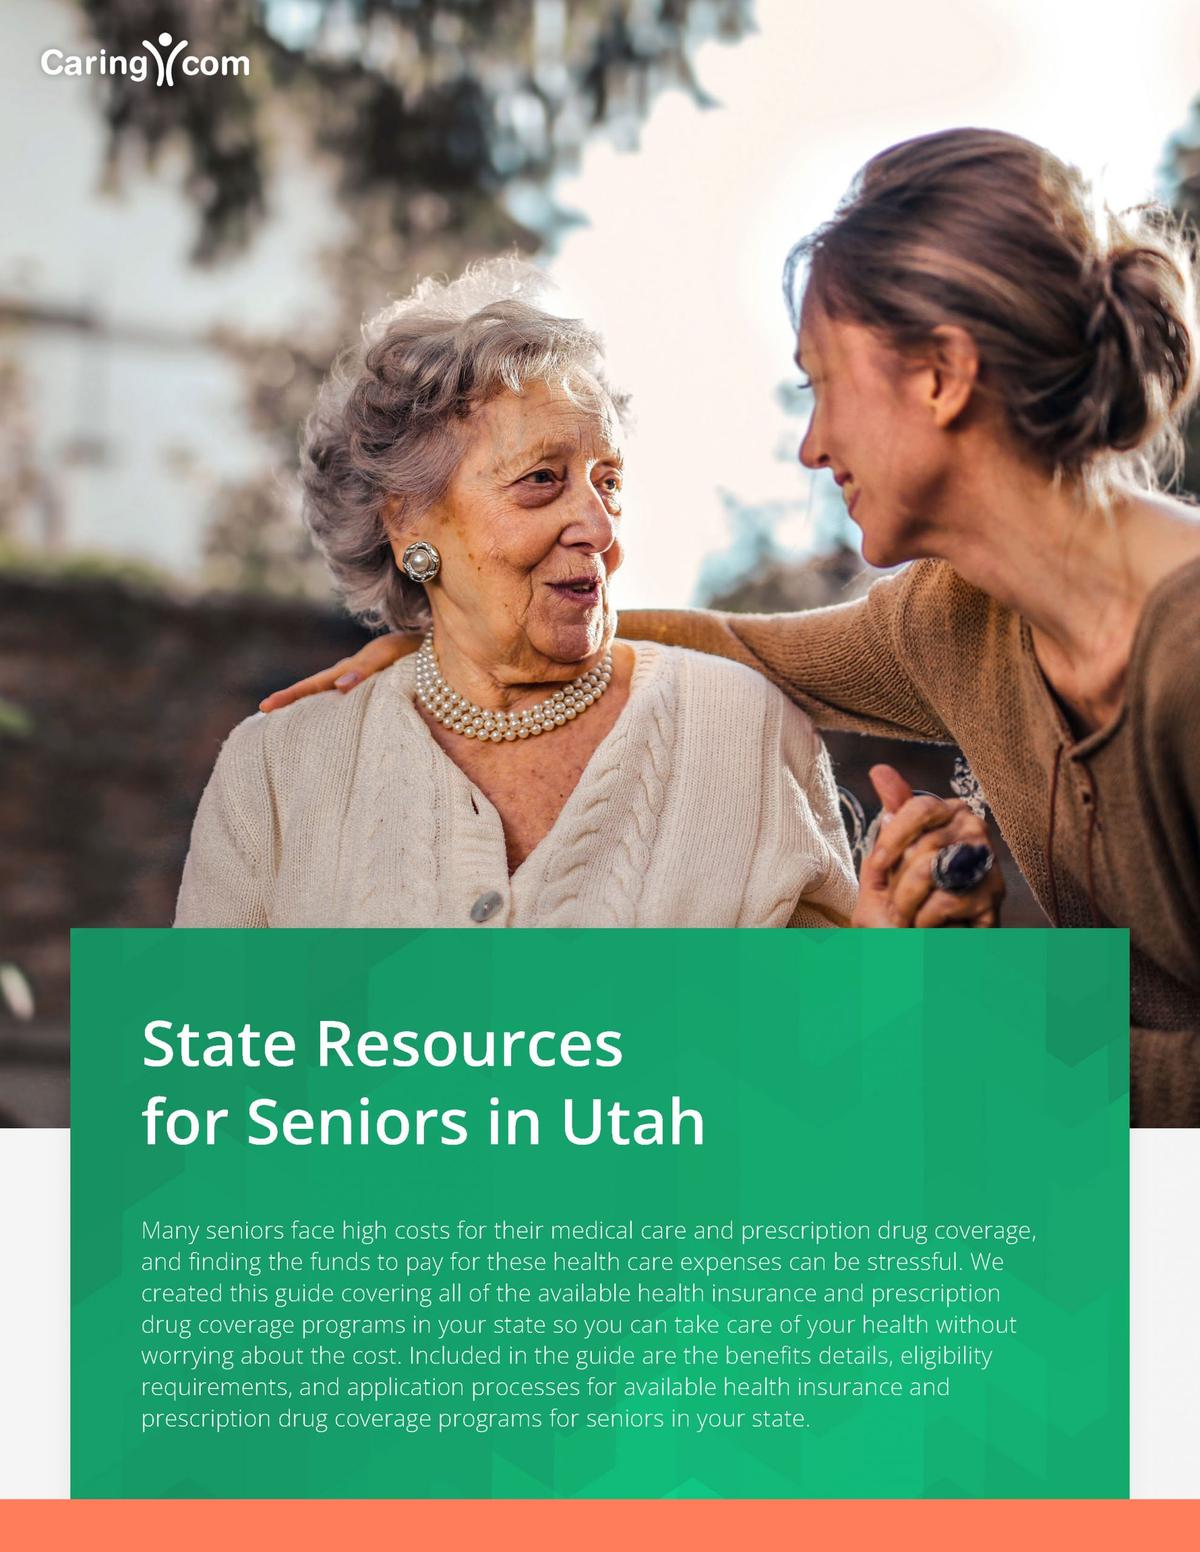 Financial Assistance for Prescriptions in Utah